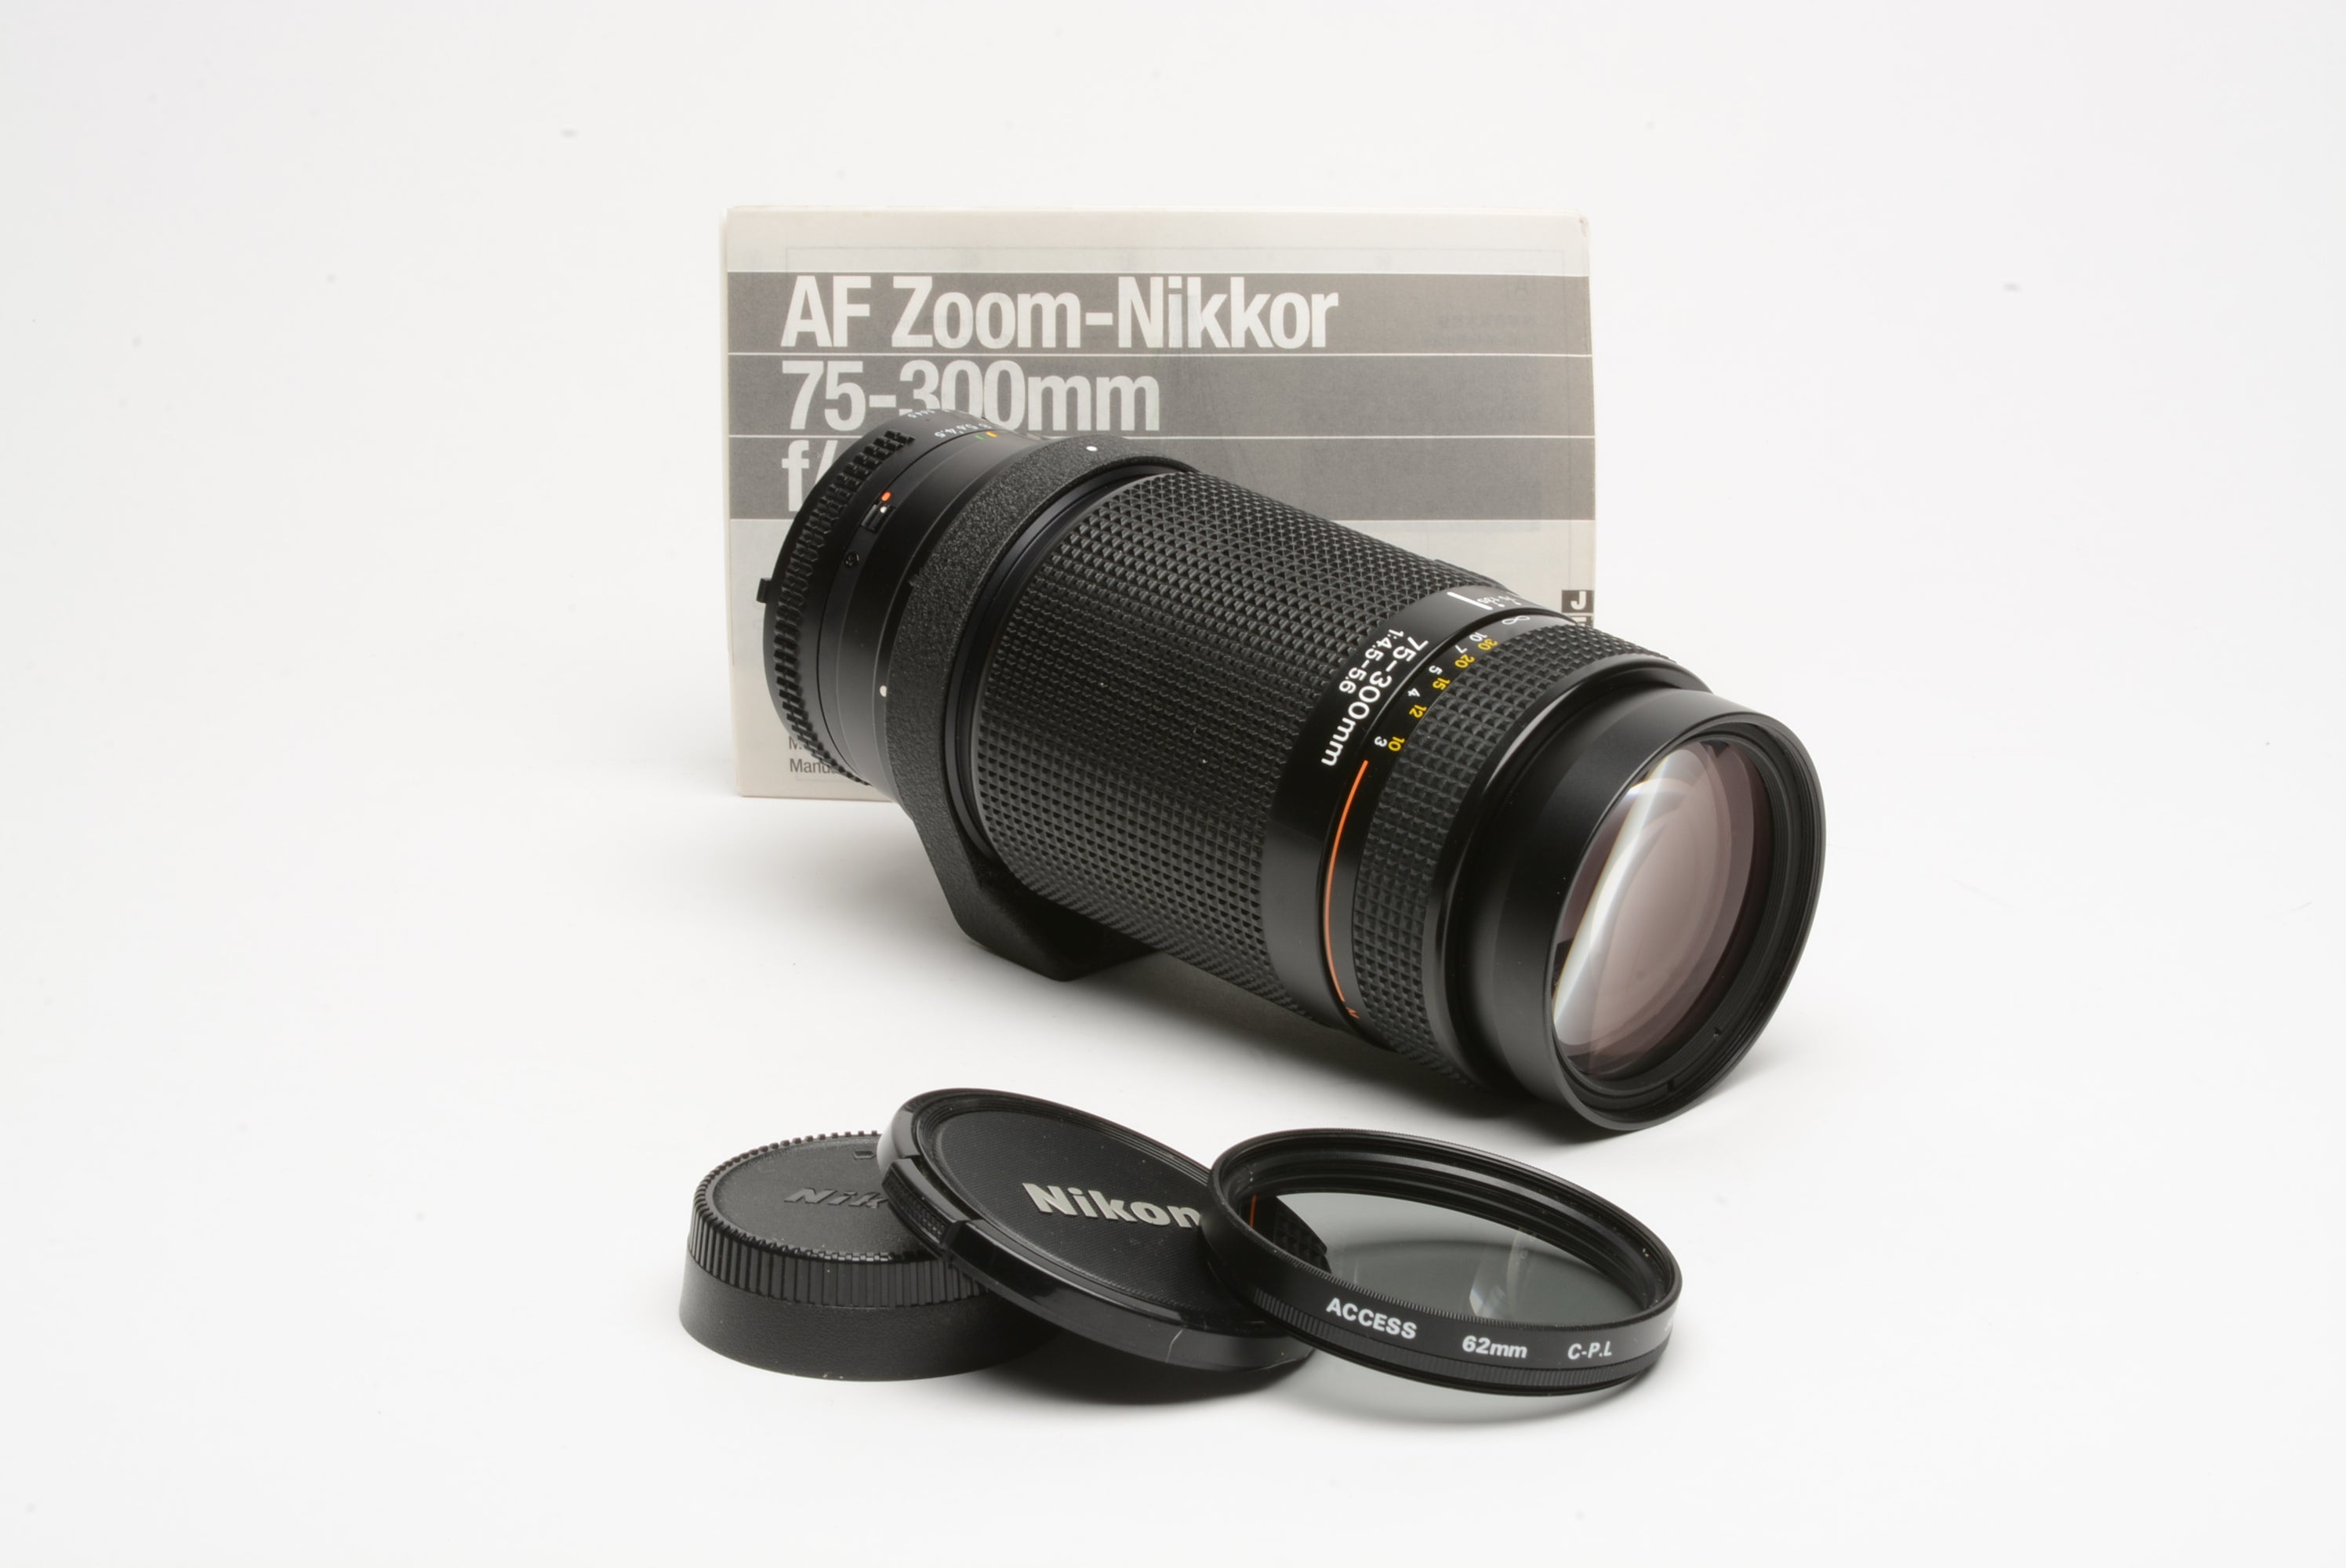 激安正規 Nikon AF Zoom-Nikkor ニコン AF AF NIKKOR 75-300mm 75-300mm 75-300mm NIKKOR  4.5-5.6 三脚座付 f/4.5-5.6 レンズ(ズーム)